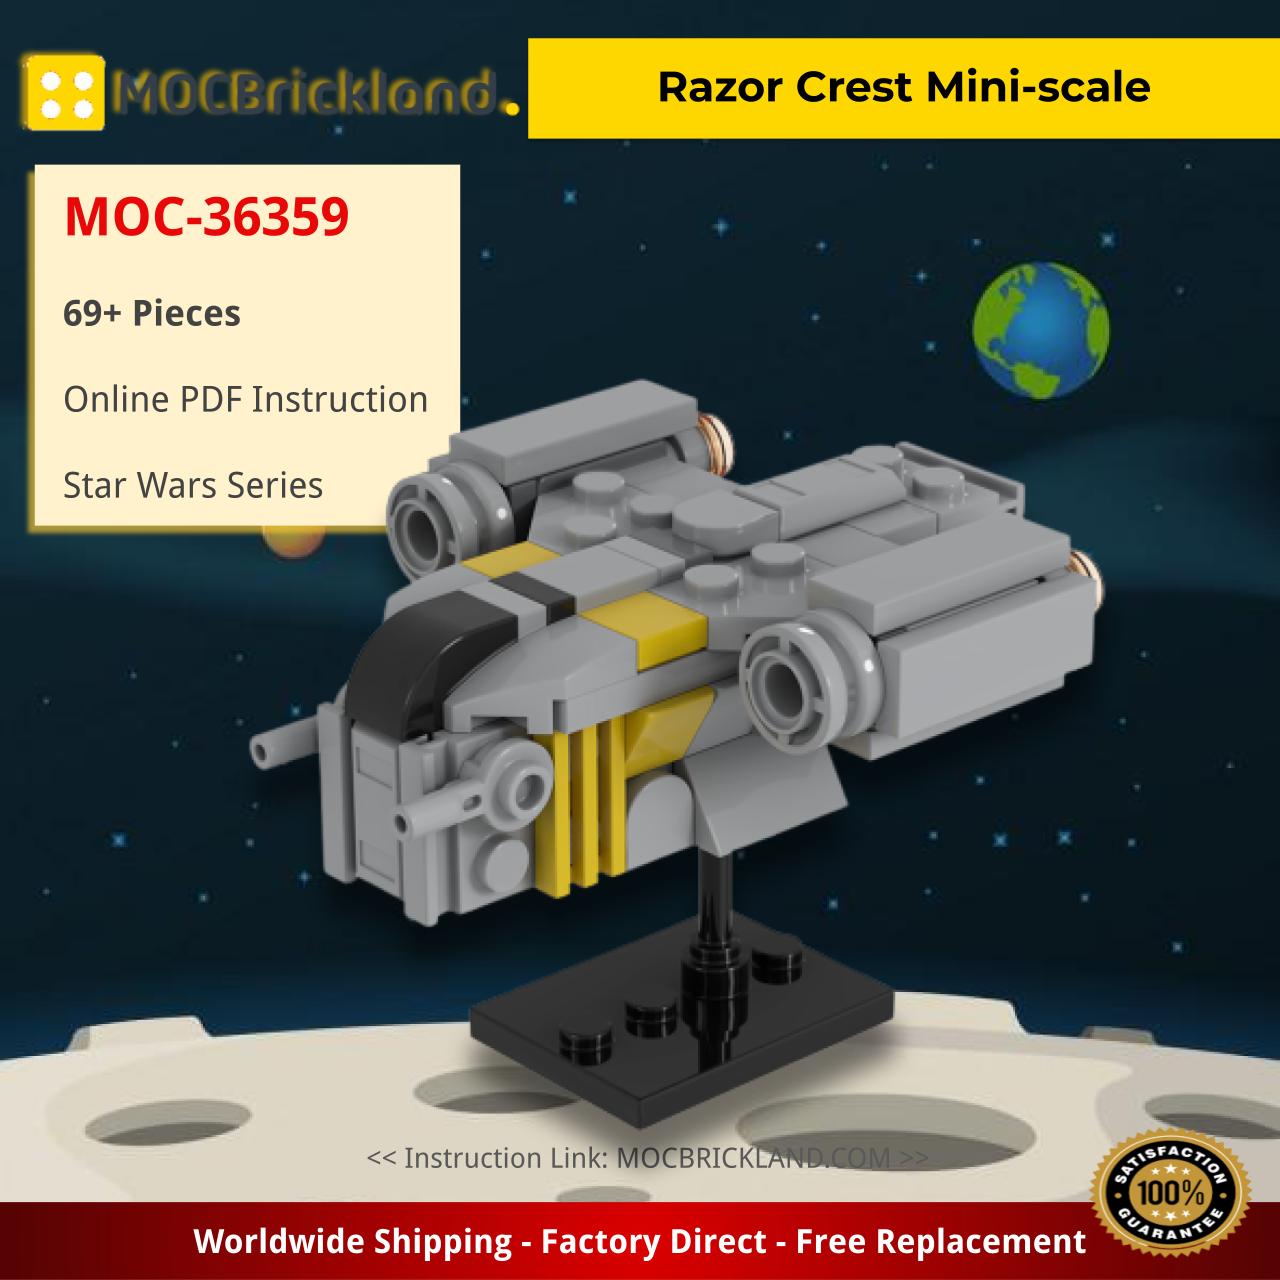 star wars moc 36359 razor crest mini scale by 2bricksofficial mocbrickland 7846